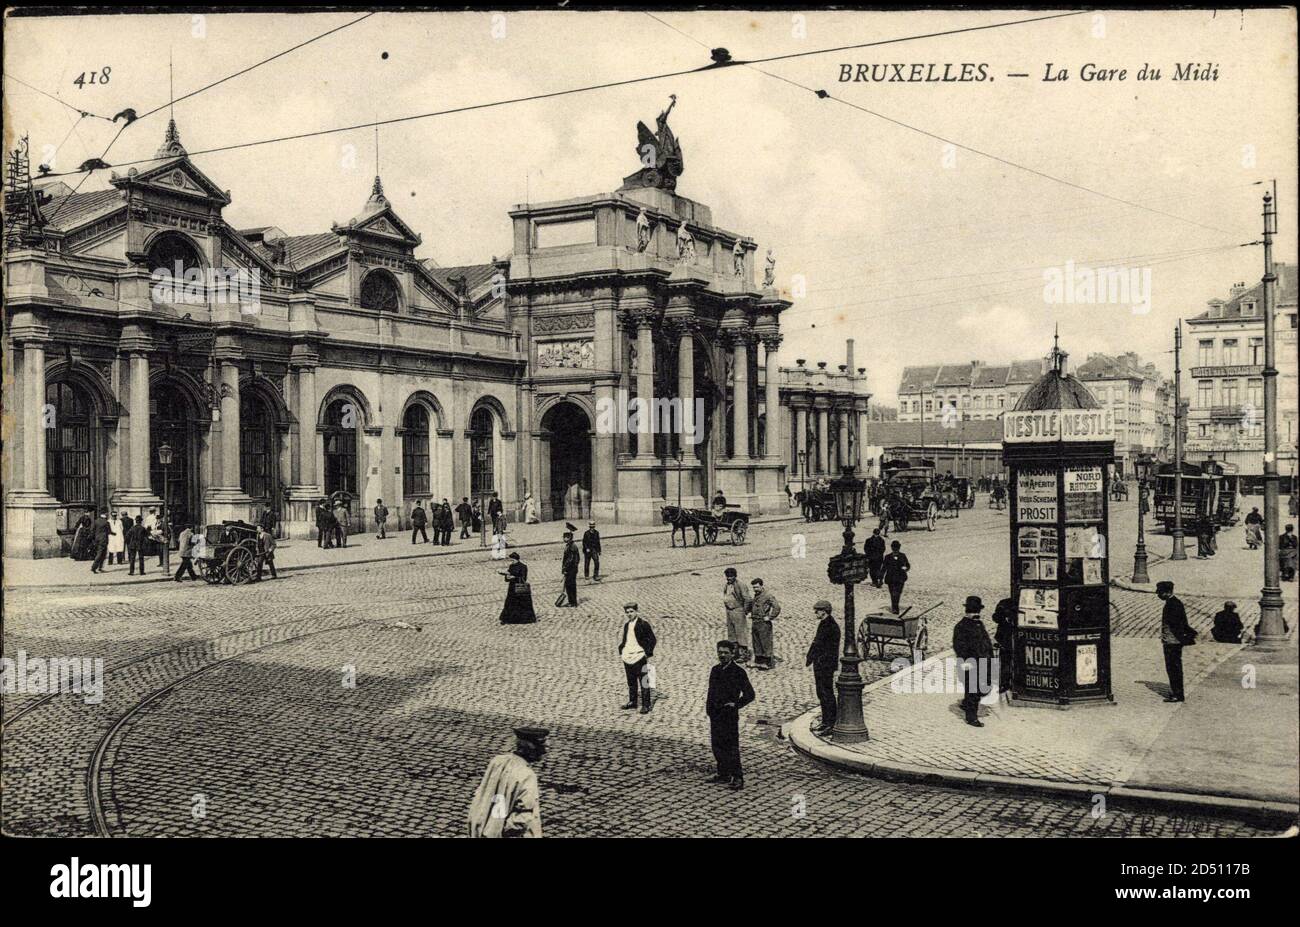 Brüssel, La Gare du Midi, Bahnhof, Straßensicht, Litfaßsäule - weltweite  Nutzung Stockfotografie - Alamy